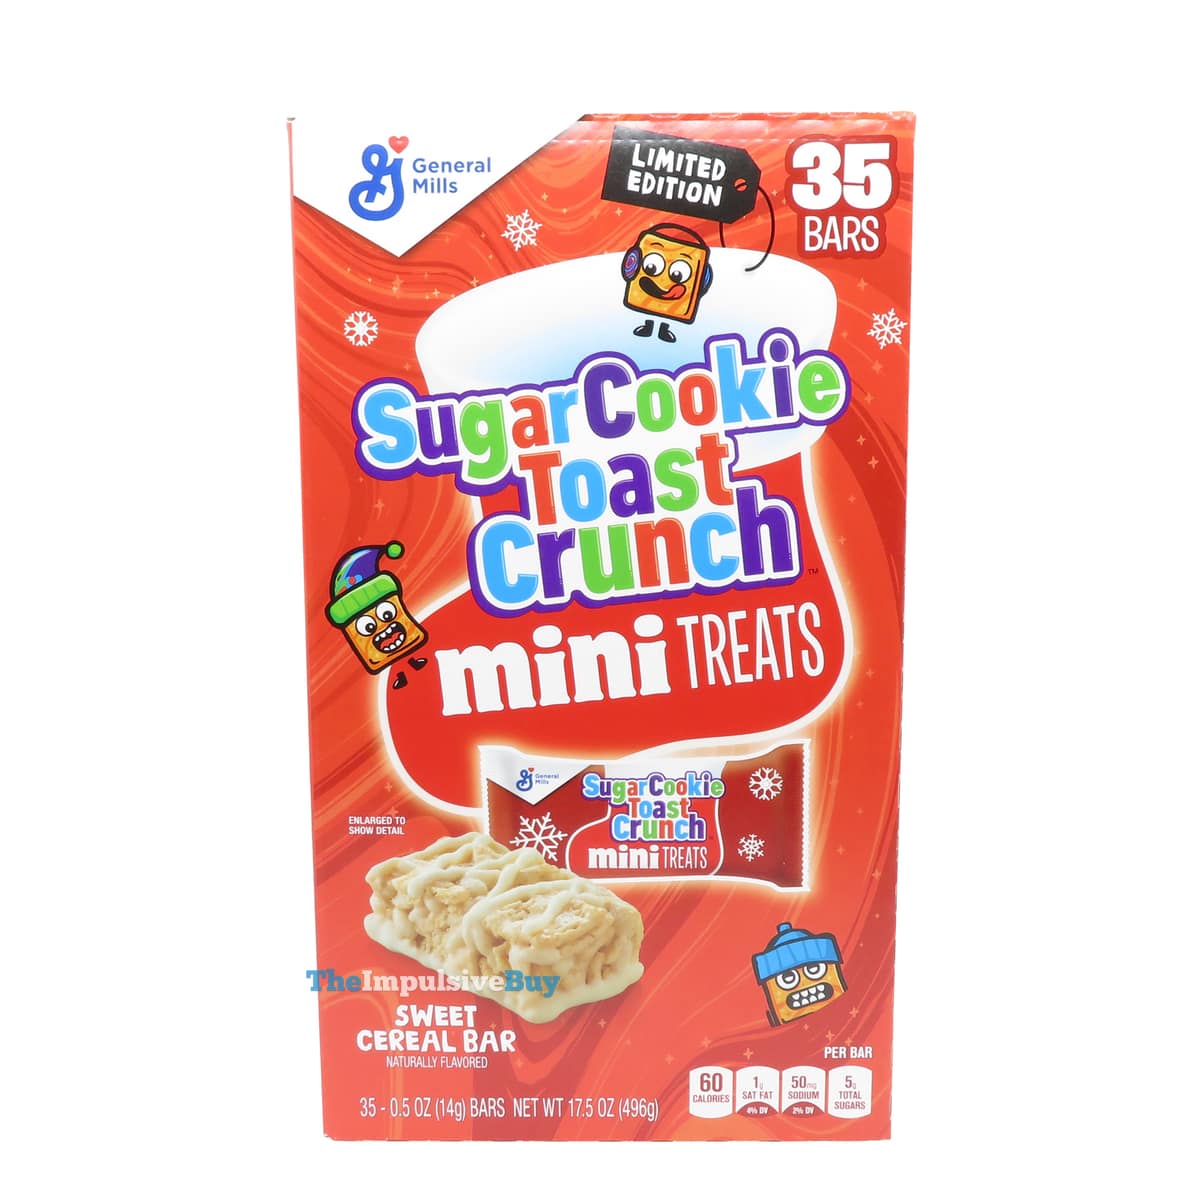 REVIEW: Sugar Cookie Toast Crunch Mini Treats - The Impulsive Buy